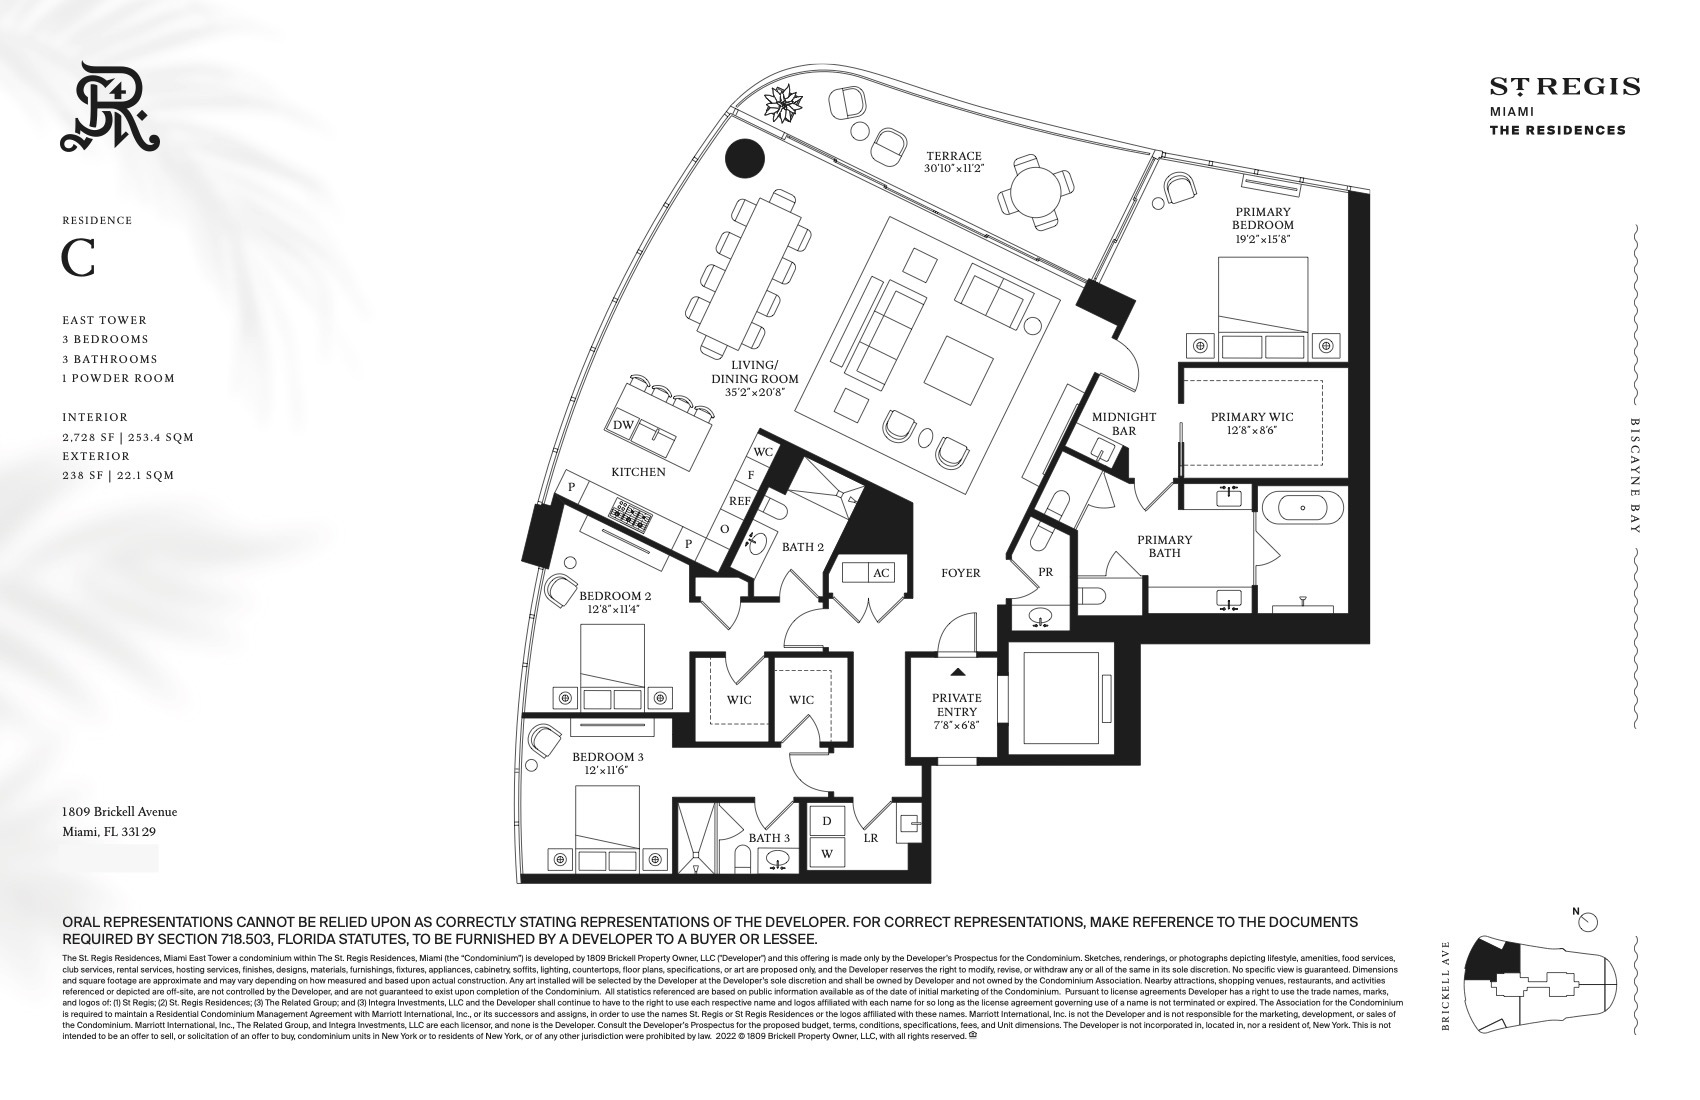 Floor Plan for St. Regis Brickell Floorplans, Residence C